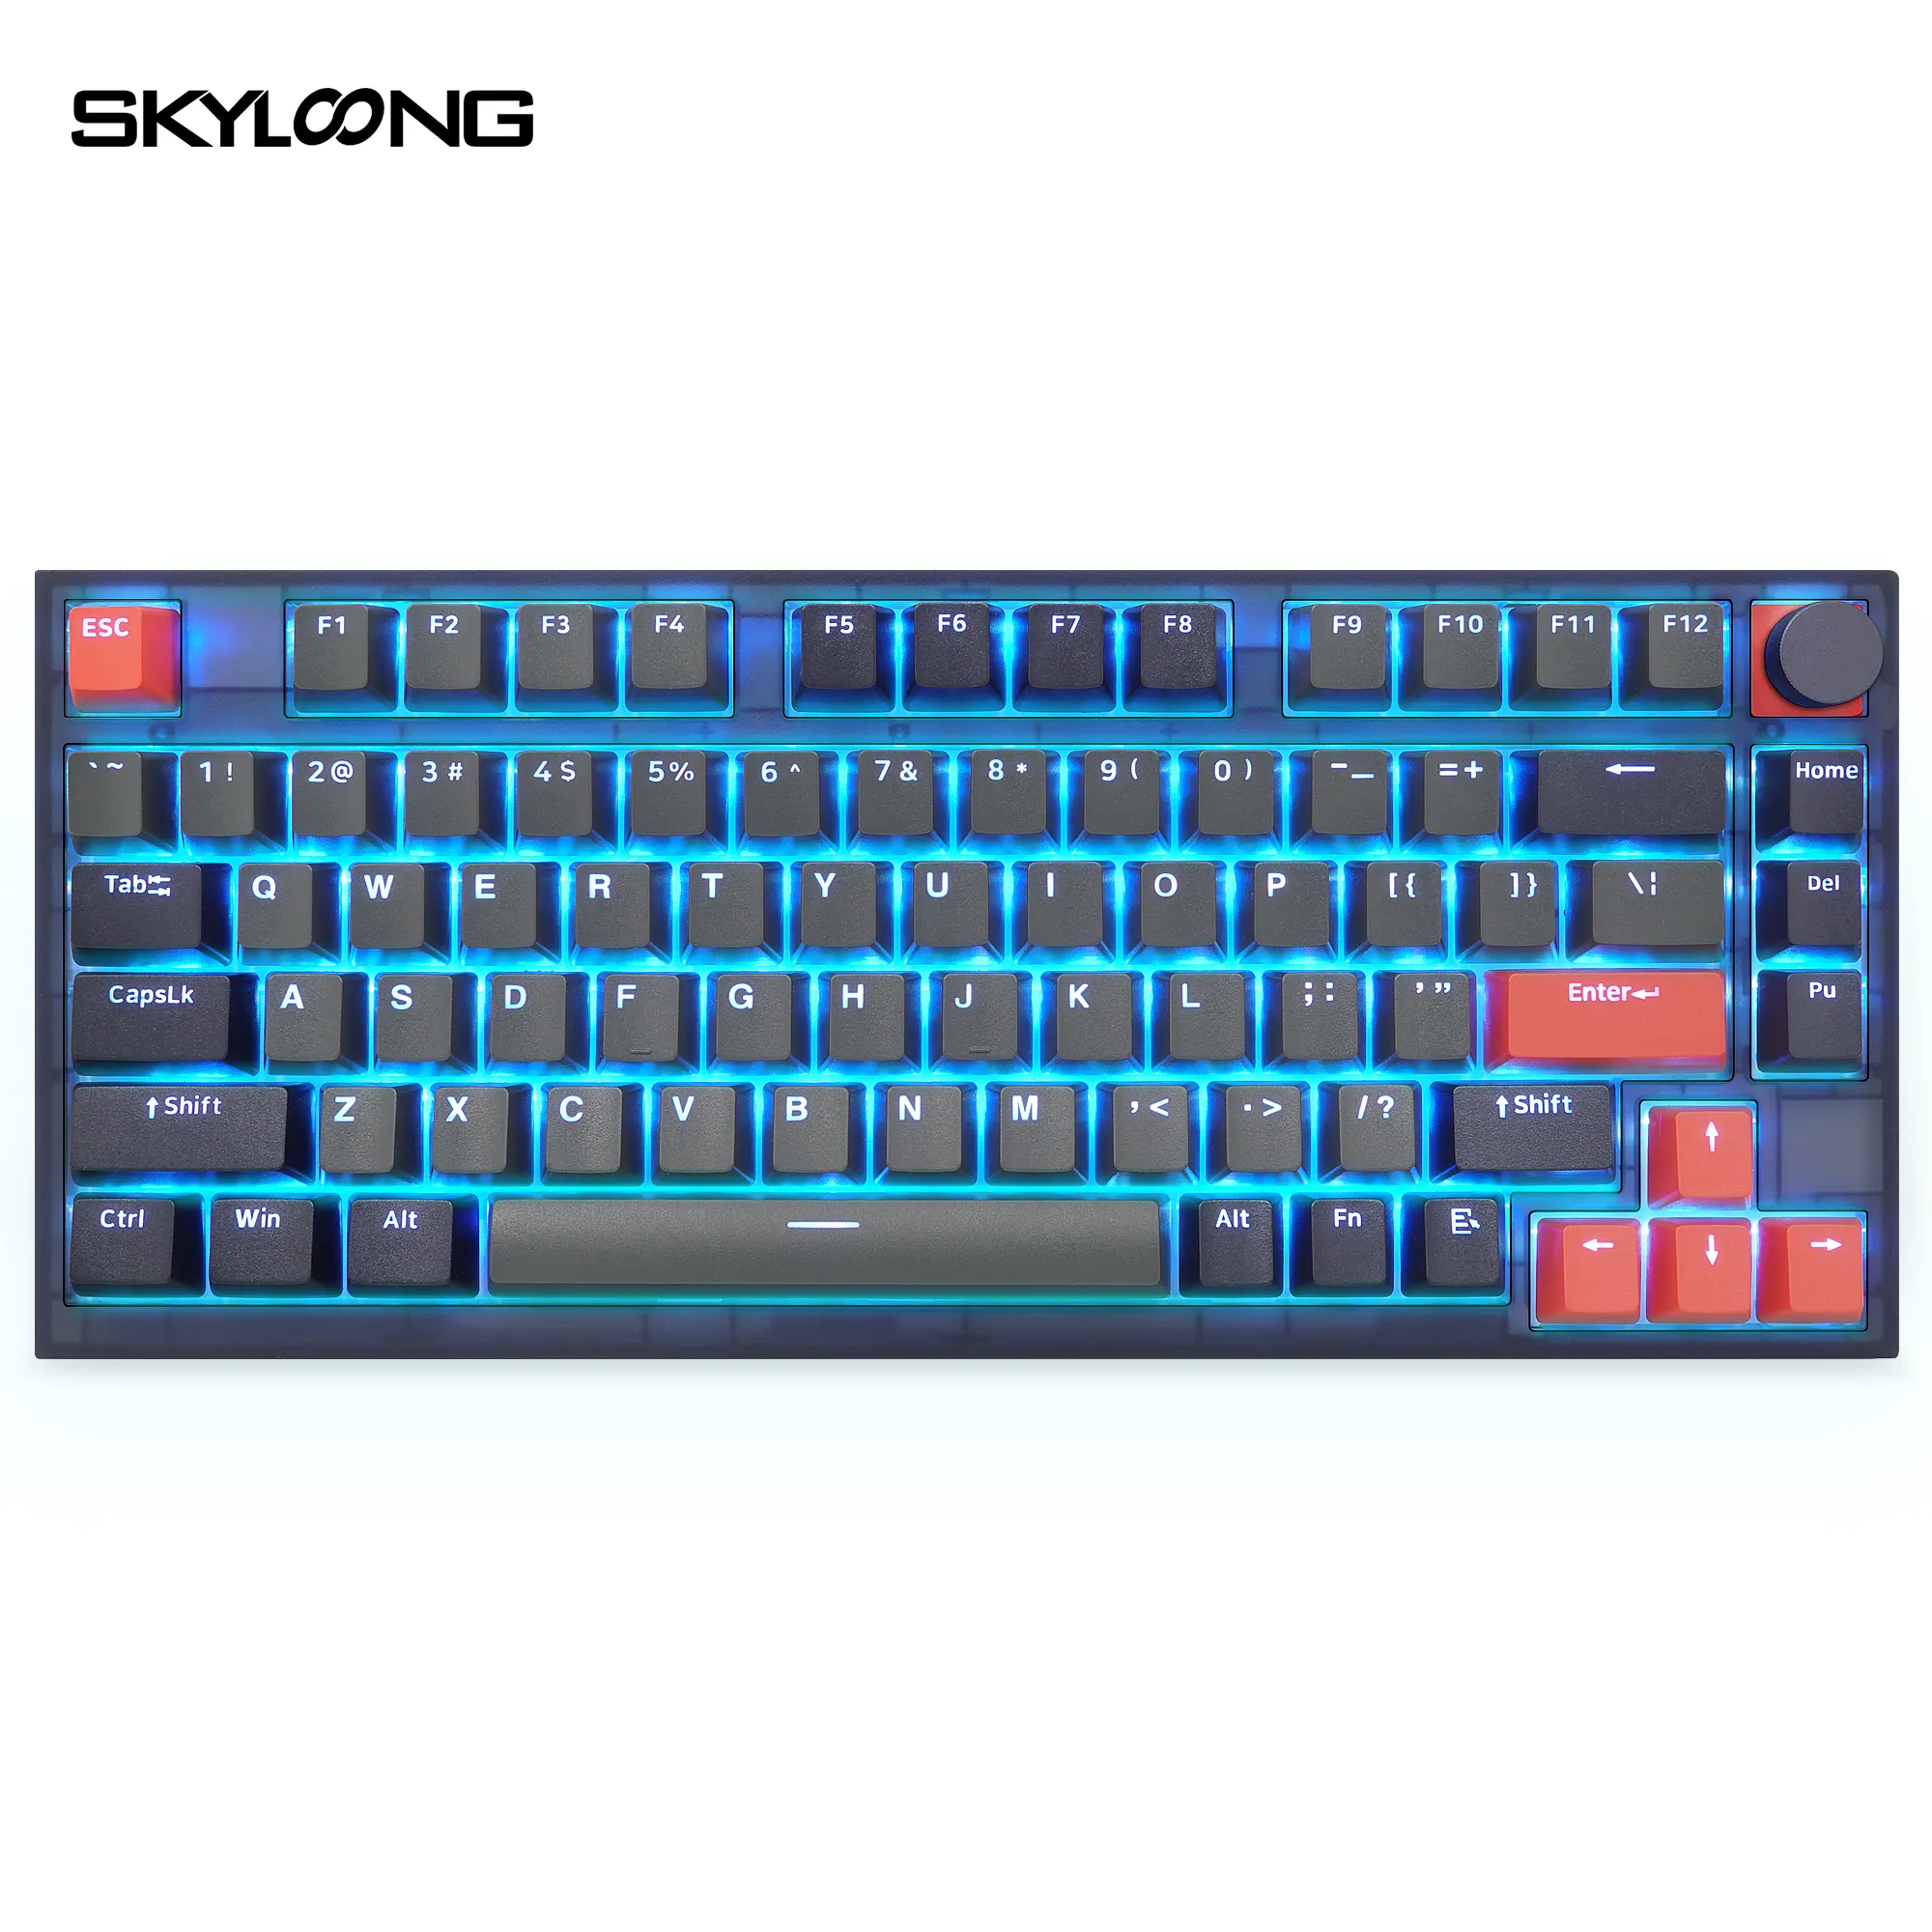 Skyloong new hotsale wired 75% win/mac single LED backlit optical switch gaming mechanical keyboard